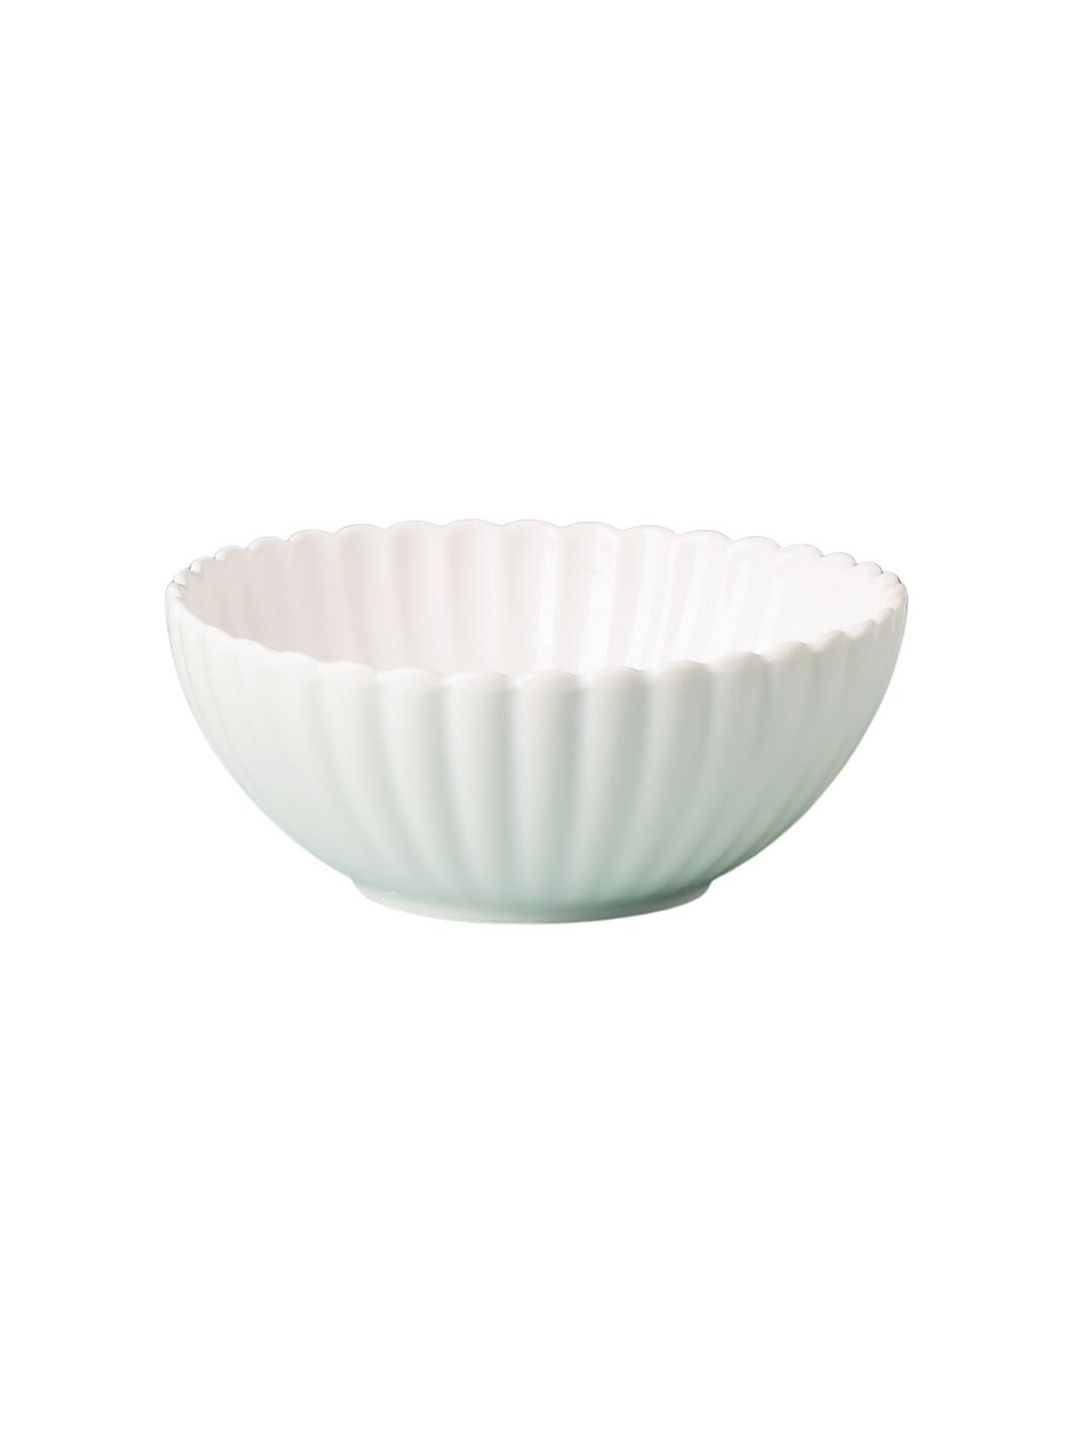 Nestasia White & 1 Pieces Textured Ceramic Glossy Bowls Price in India